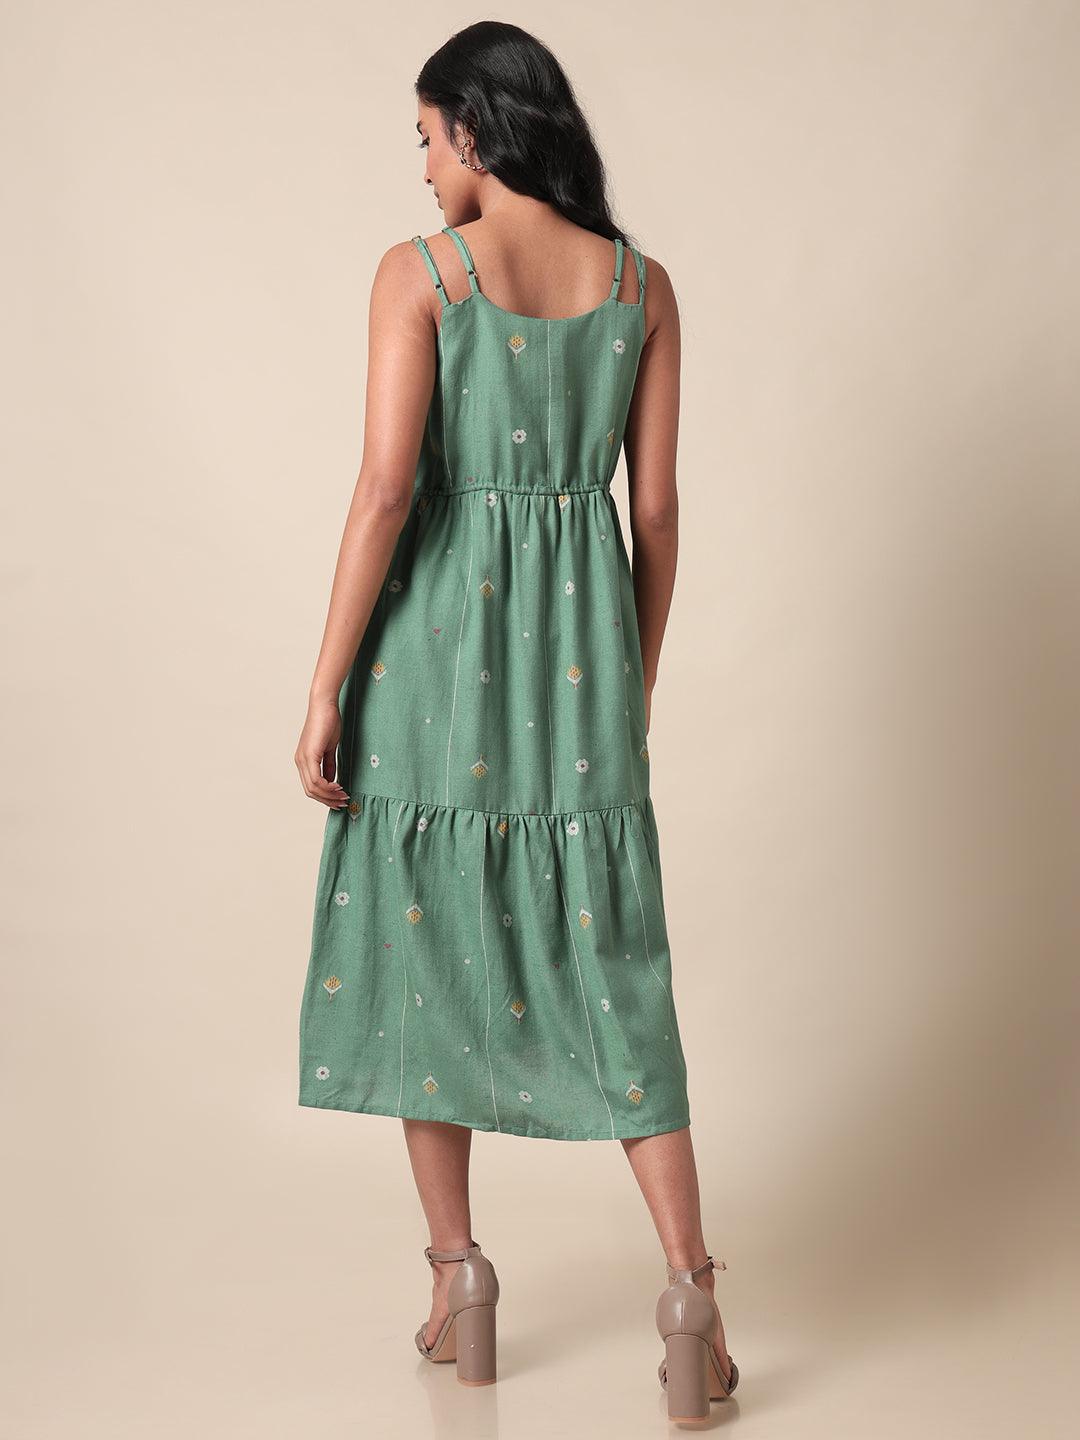 Kaleidoscope Printed Strappy Green Dress